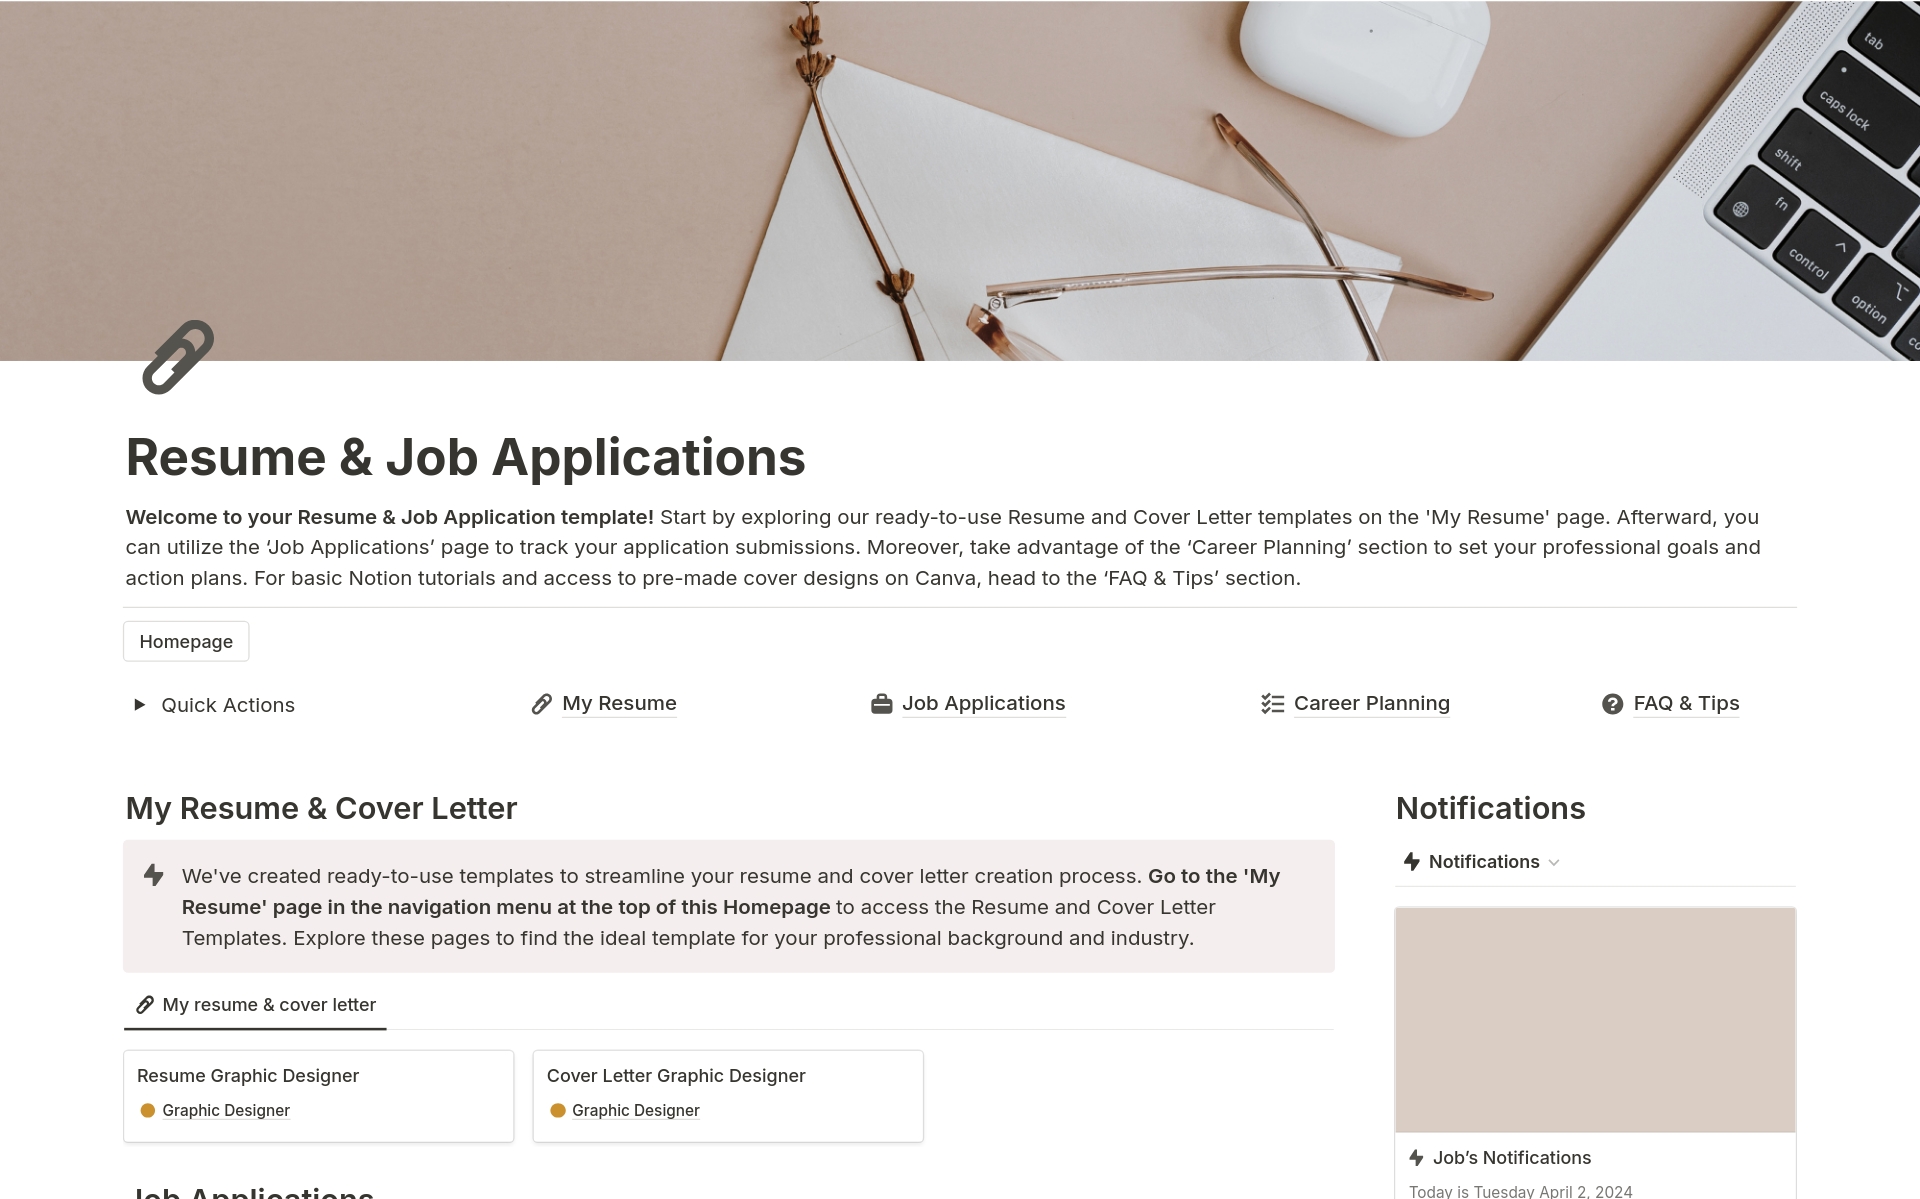 Resume, Job Application Tracker, Career Planning님의 템플릿 미리보기